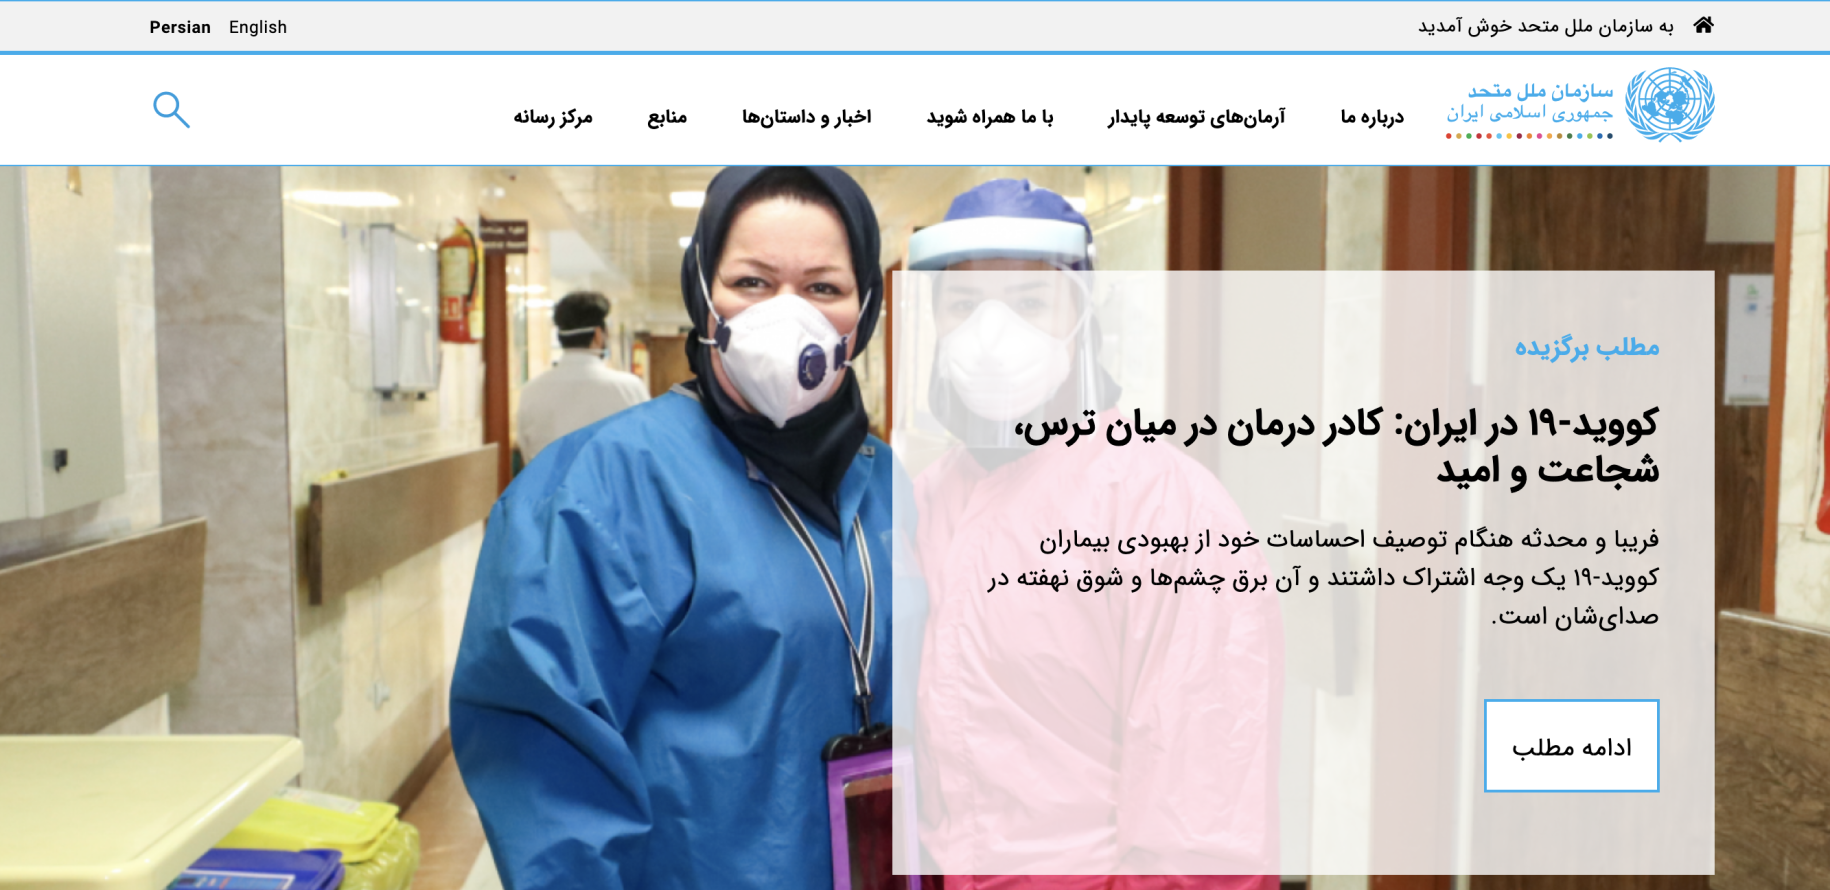 Screenshot of the Iran website in Persian.